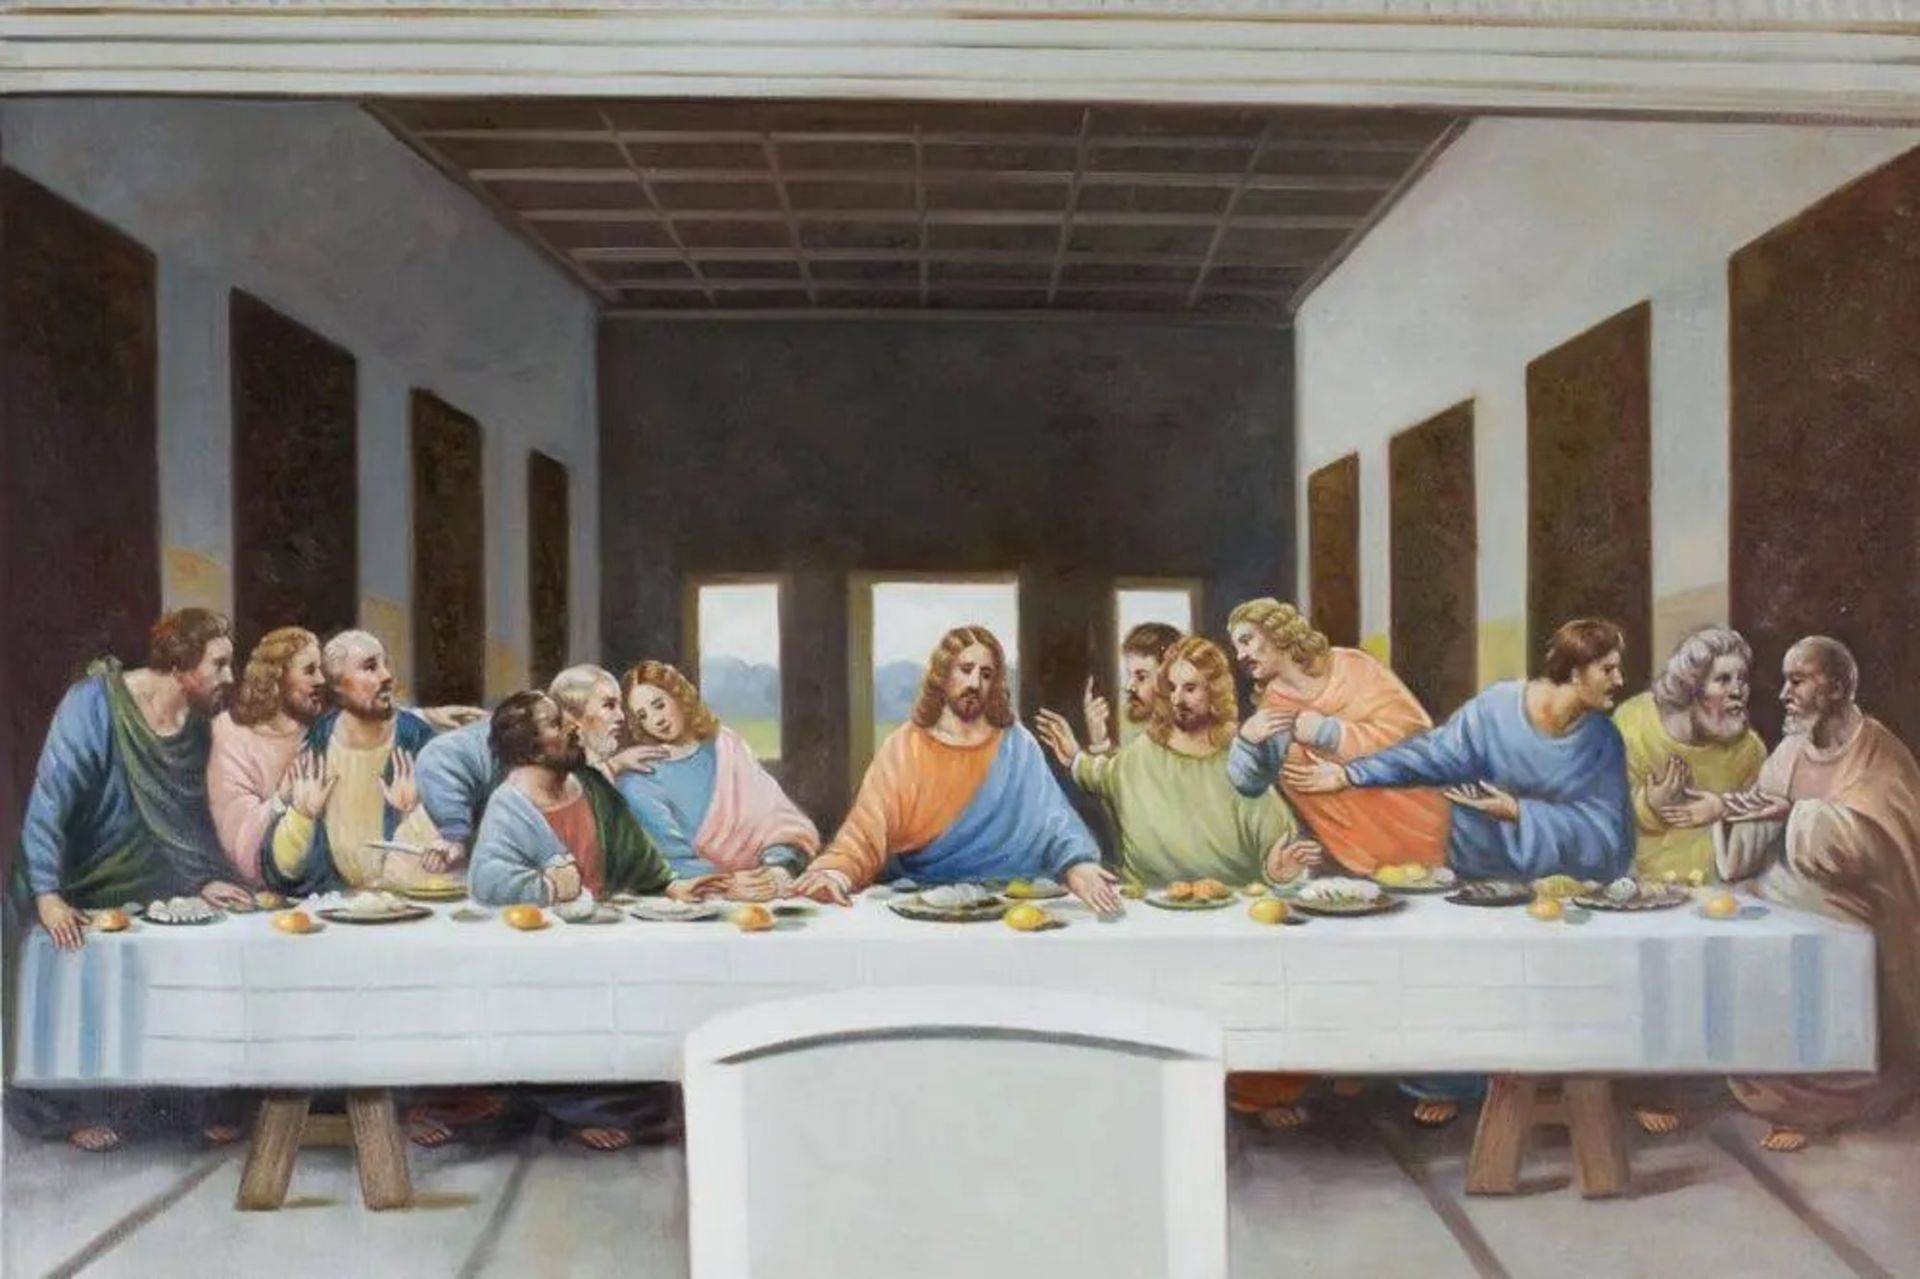 Leonardo Da Vinci "The Last Supper" Painting